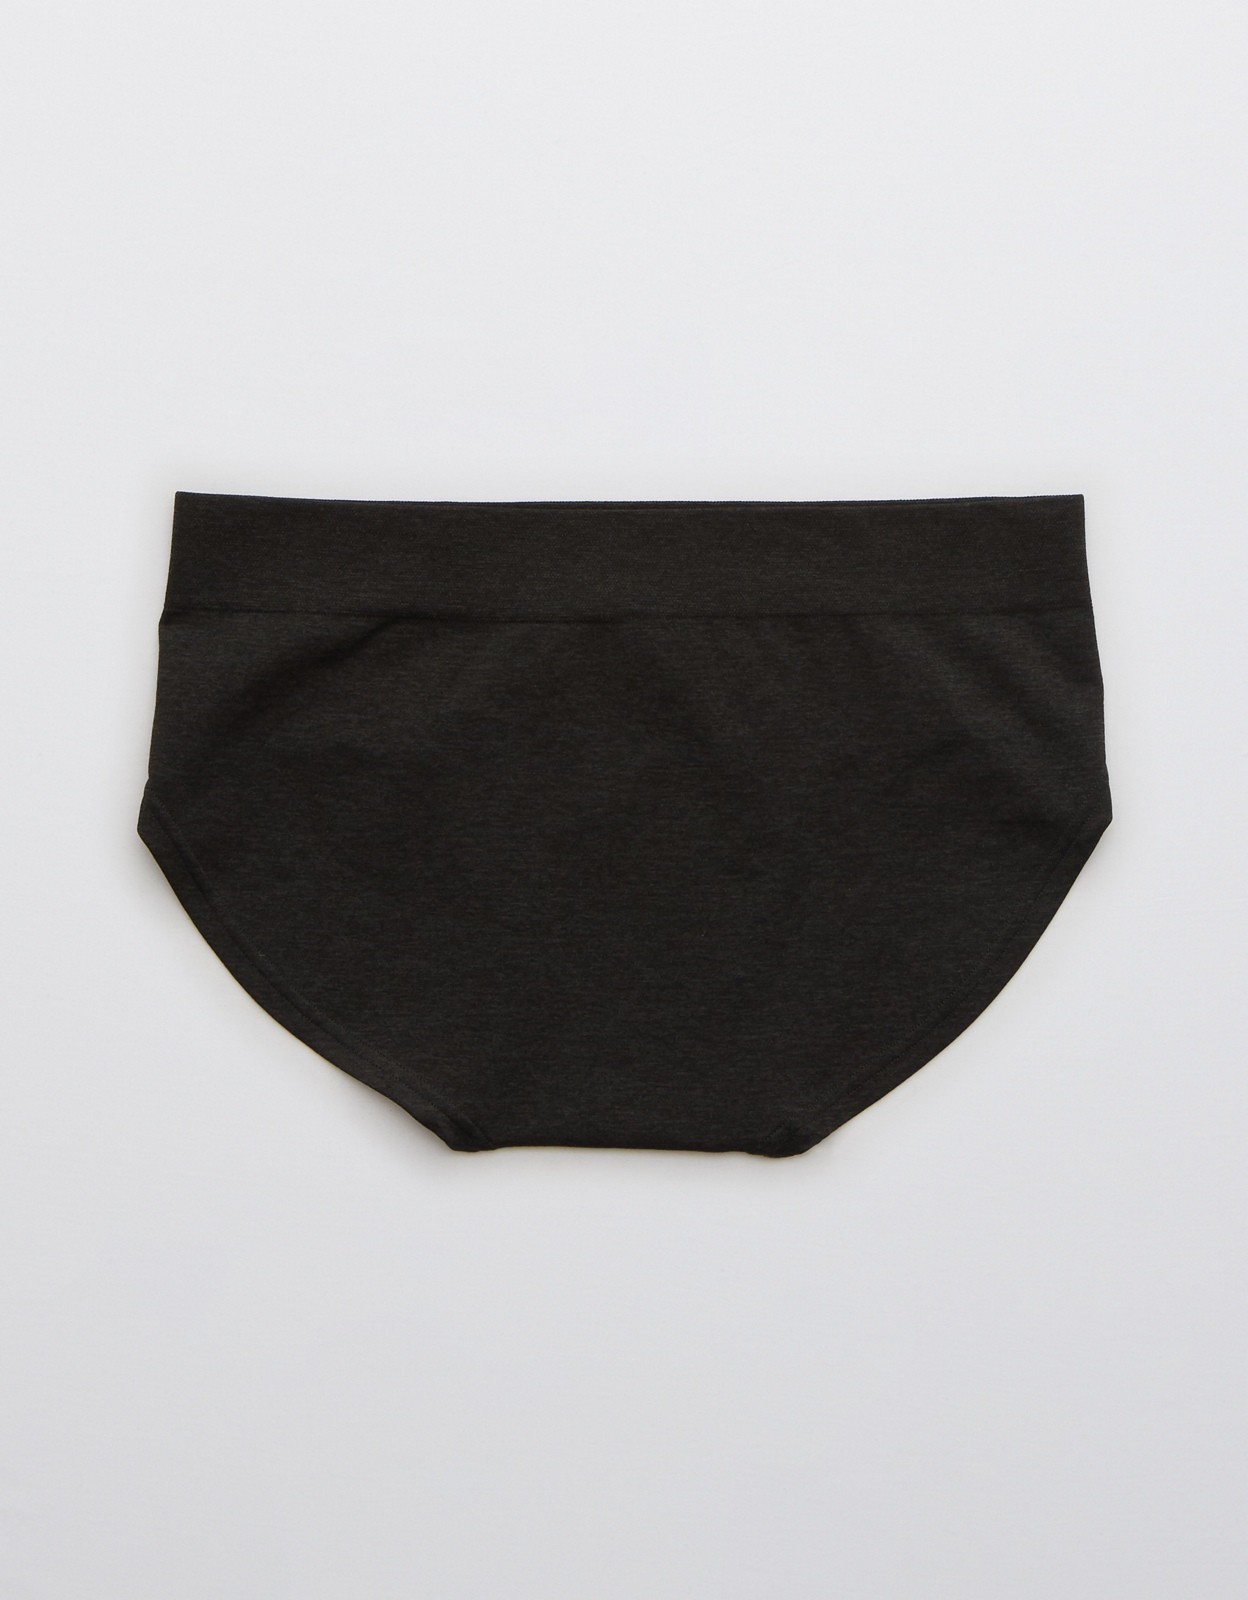 Buy Aerie Seamless Cable Boybrief Underwear online